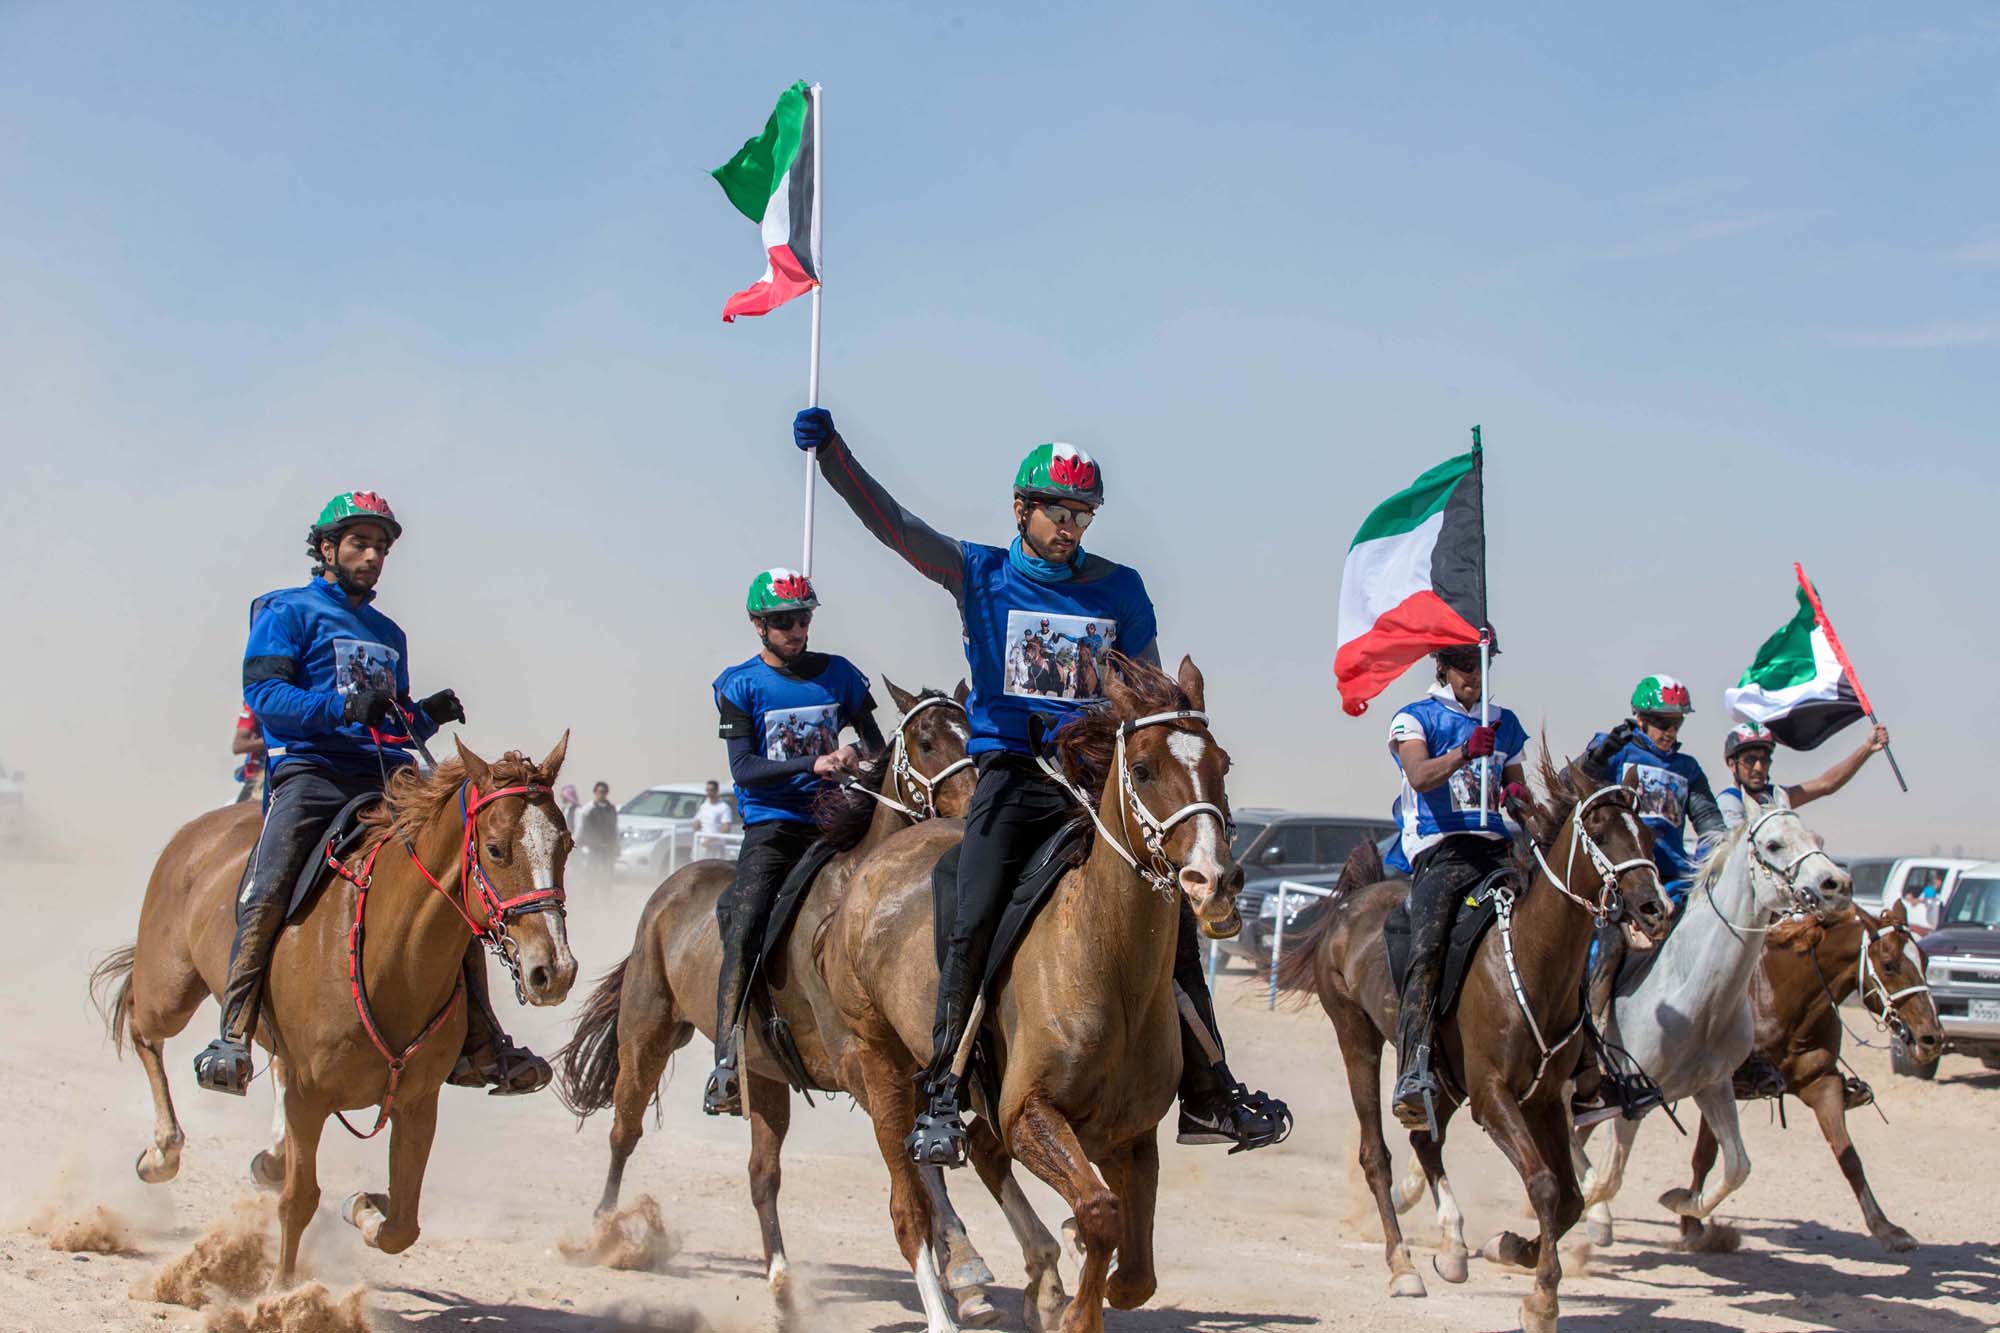 Dubai's Crown Prince equestrian Sheikh Hamdan Bin Mohammad Bin Rashid Al Maktoum was crowned champion in the Gulf endurance cup